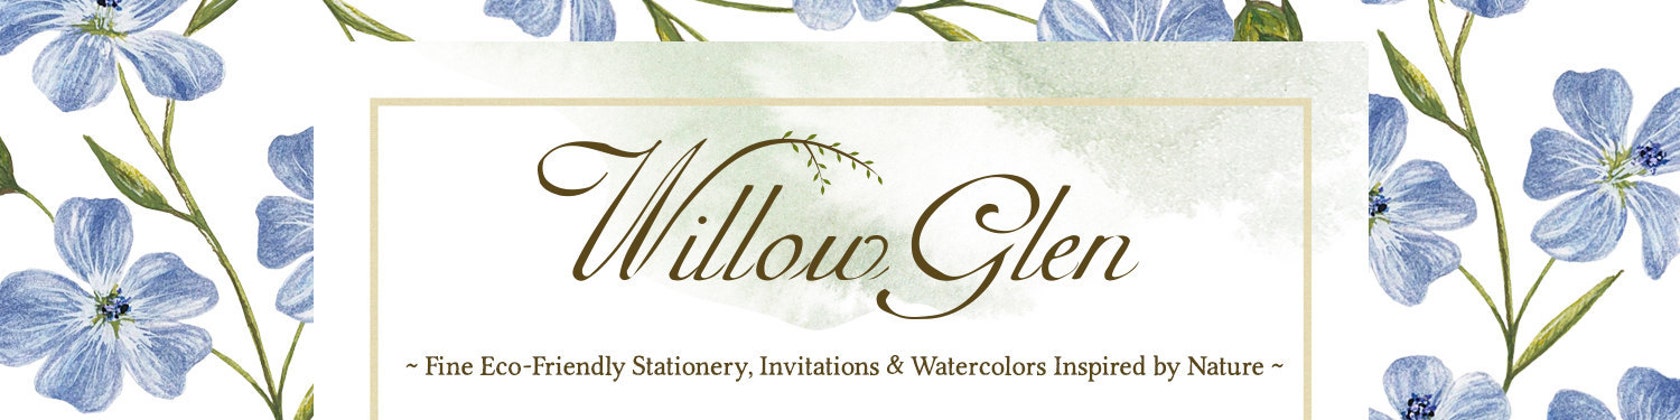 Willow Glen  Fine Eco-Friendly Stationery & Watercolors